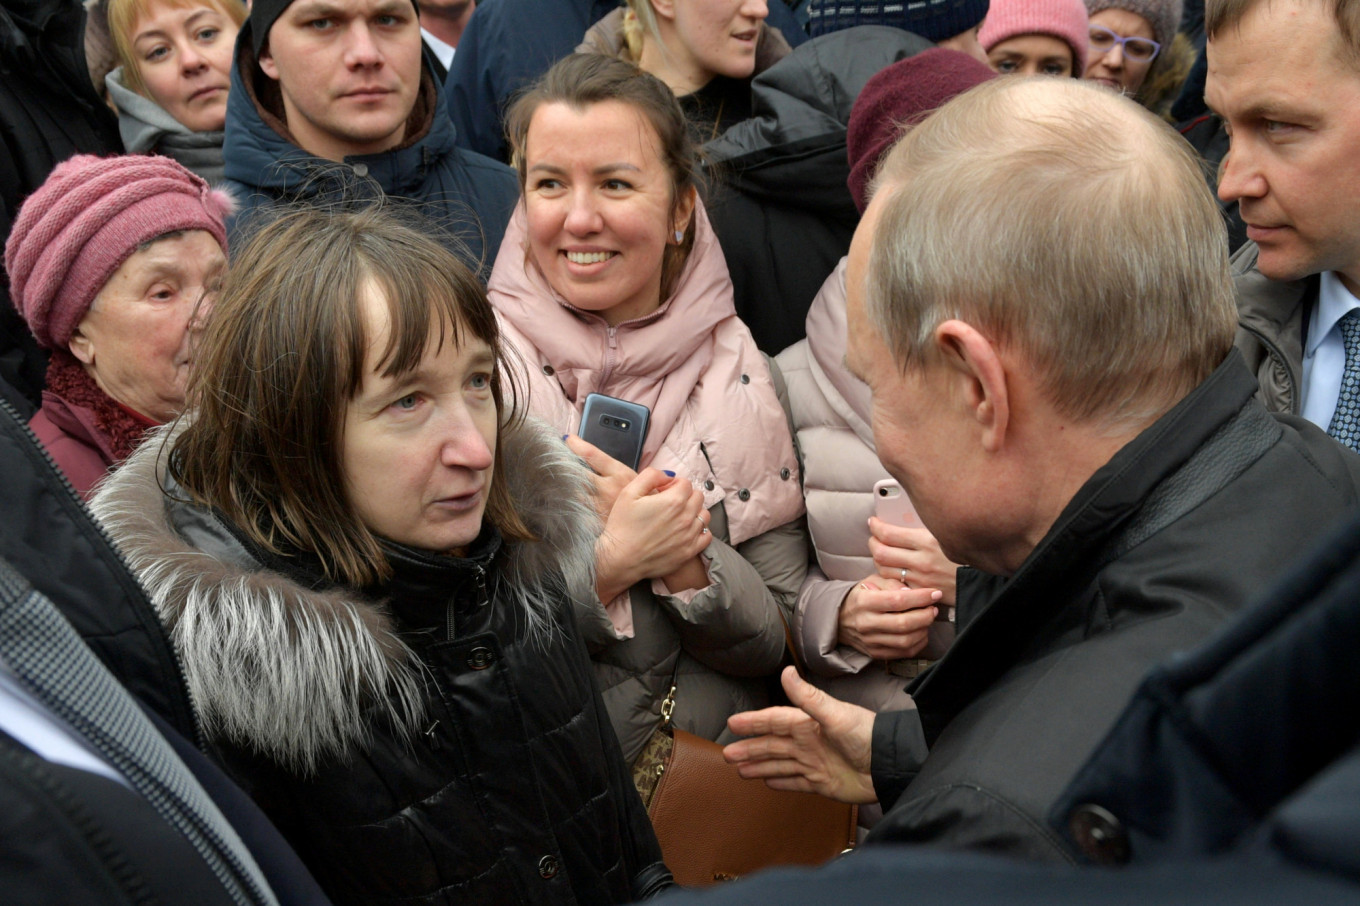 Putin Says ‘It’s Tough’ to Live Below Minimum Wage in Response to Disgruntled Woman